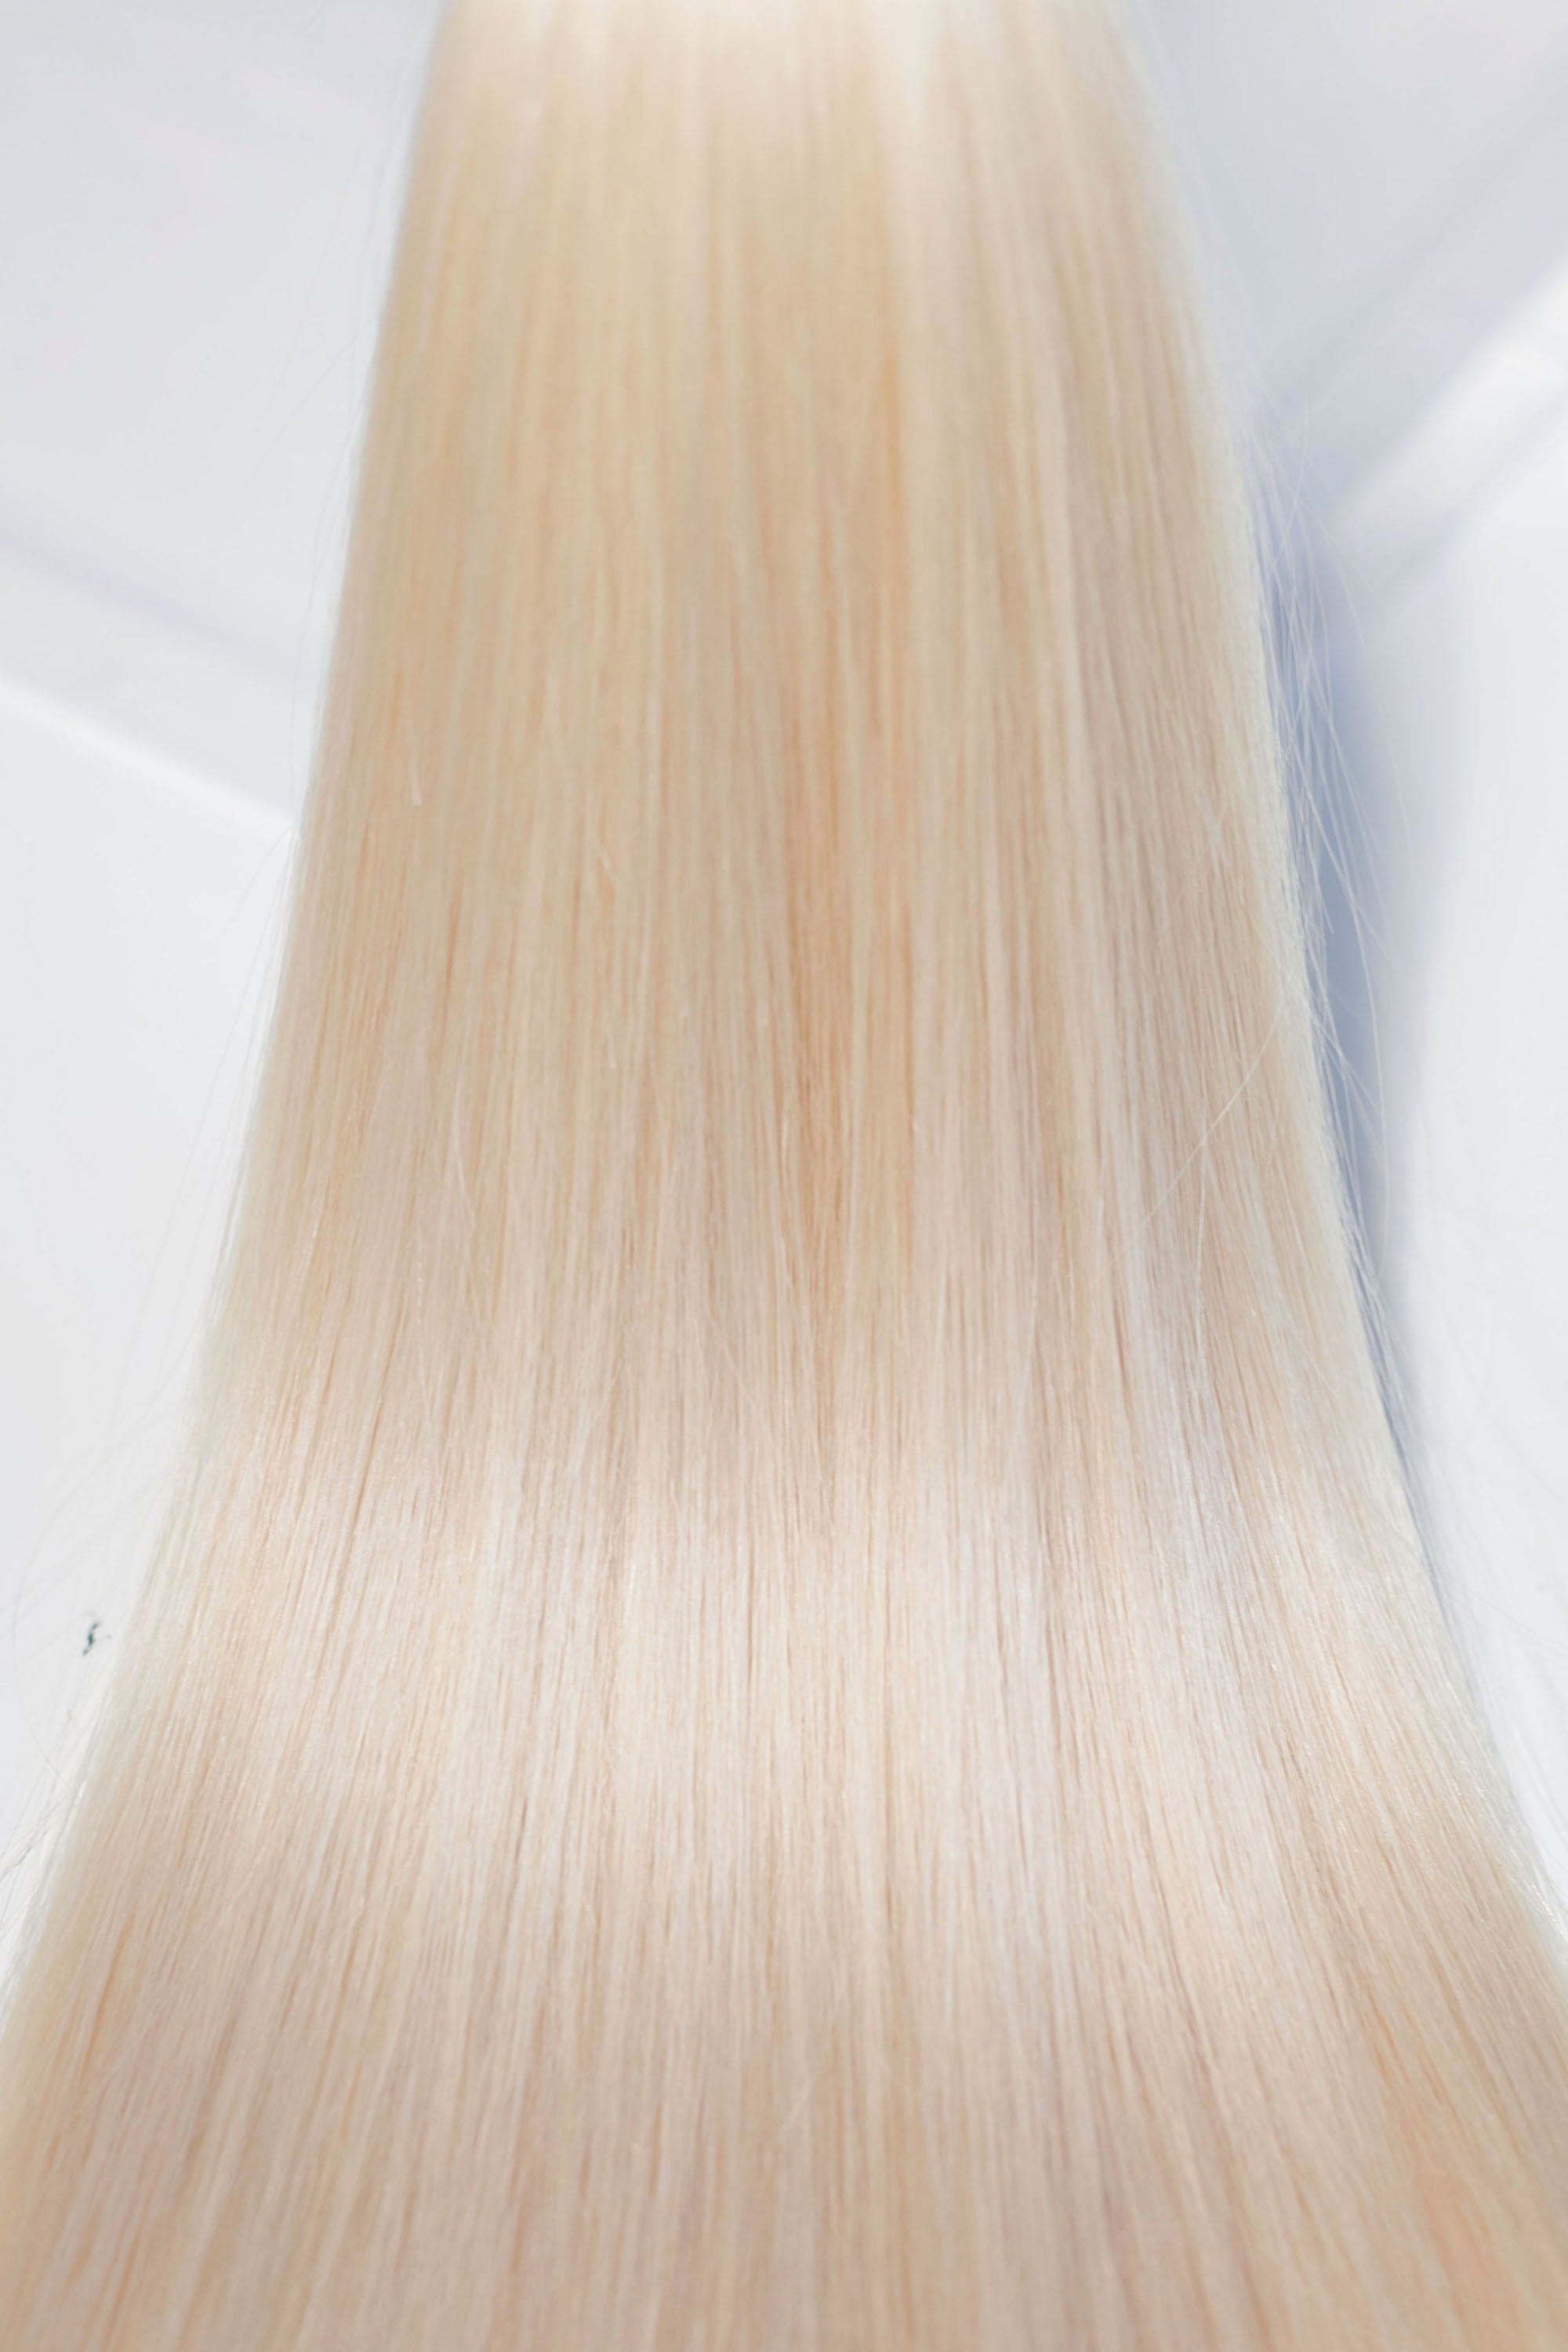 Behair professional Keratin Tip "Premium" 28" (70cm) Natural Straight Ice Blond #000 - 25g (1g each pcs) hair extensions